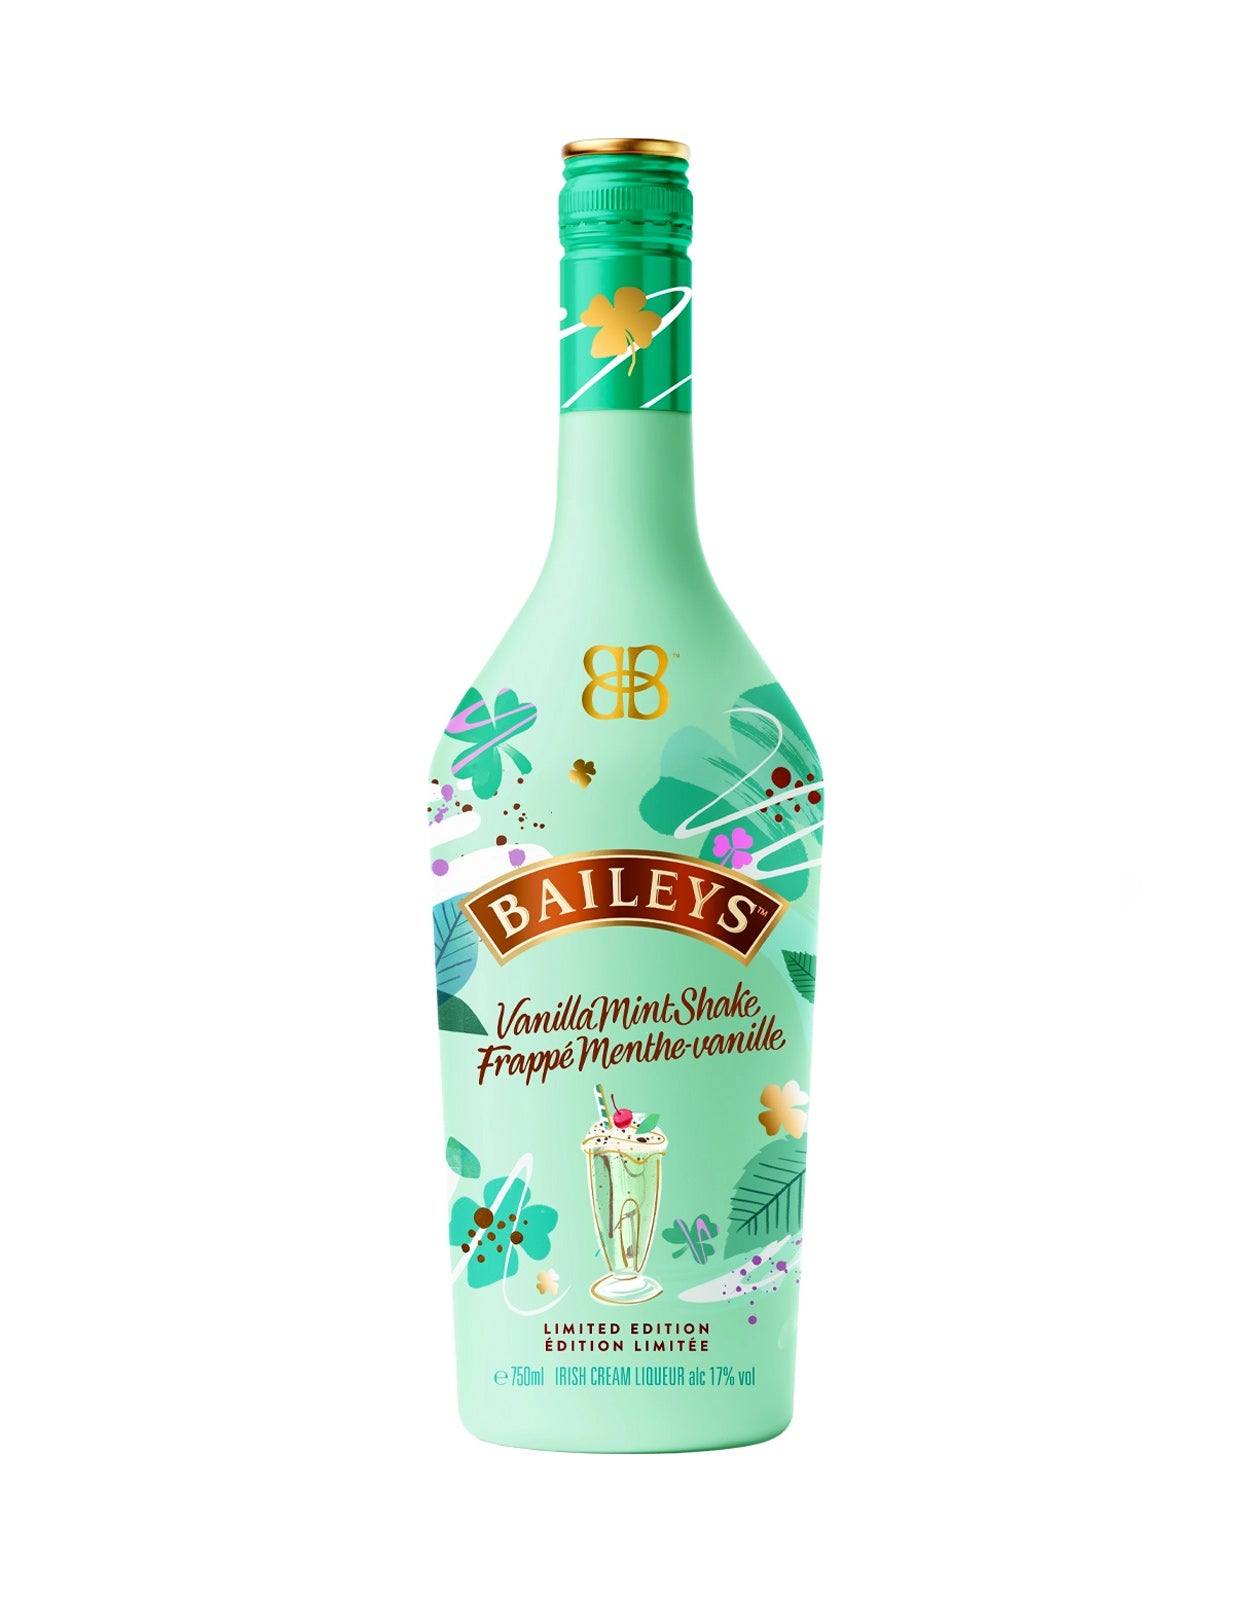 Baileys Vanilla Mint Shake Irish Cream Liqueur